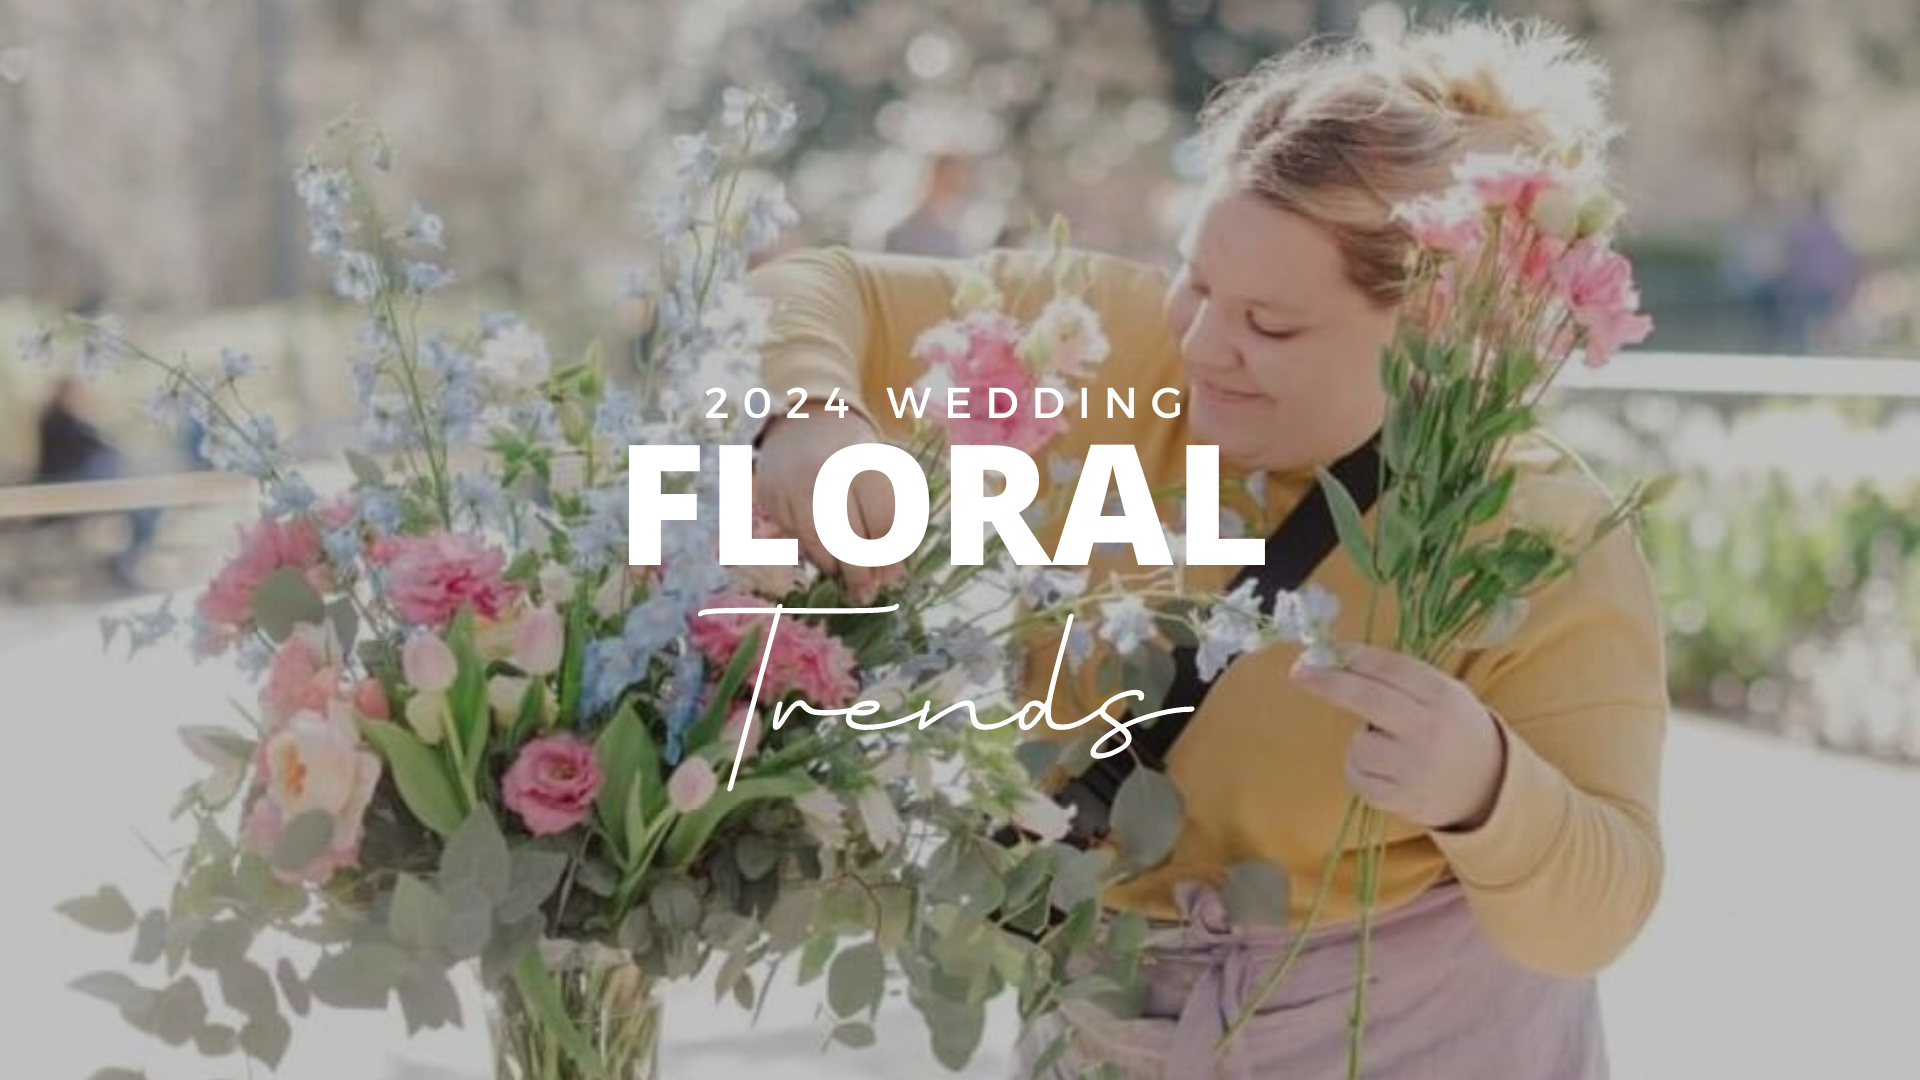 2024 Wedding Floral Trends Image